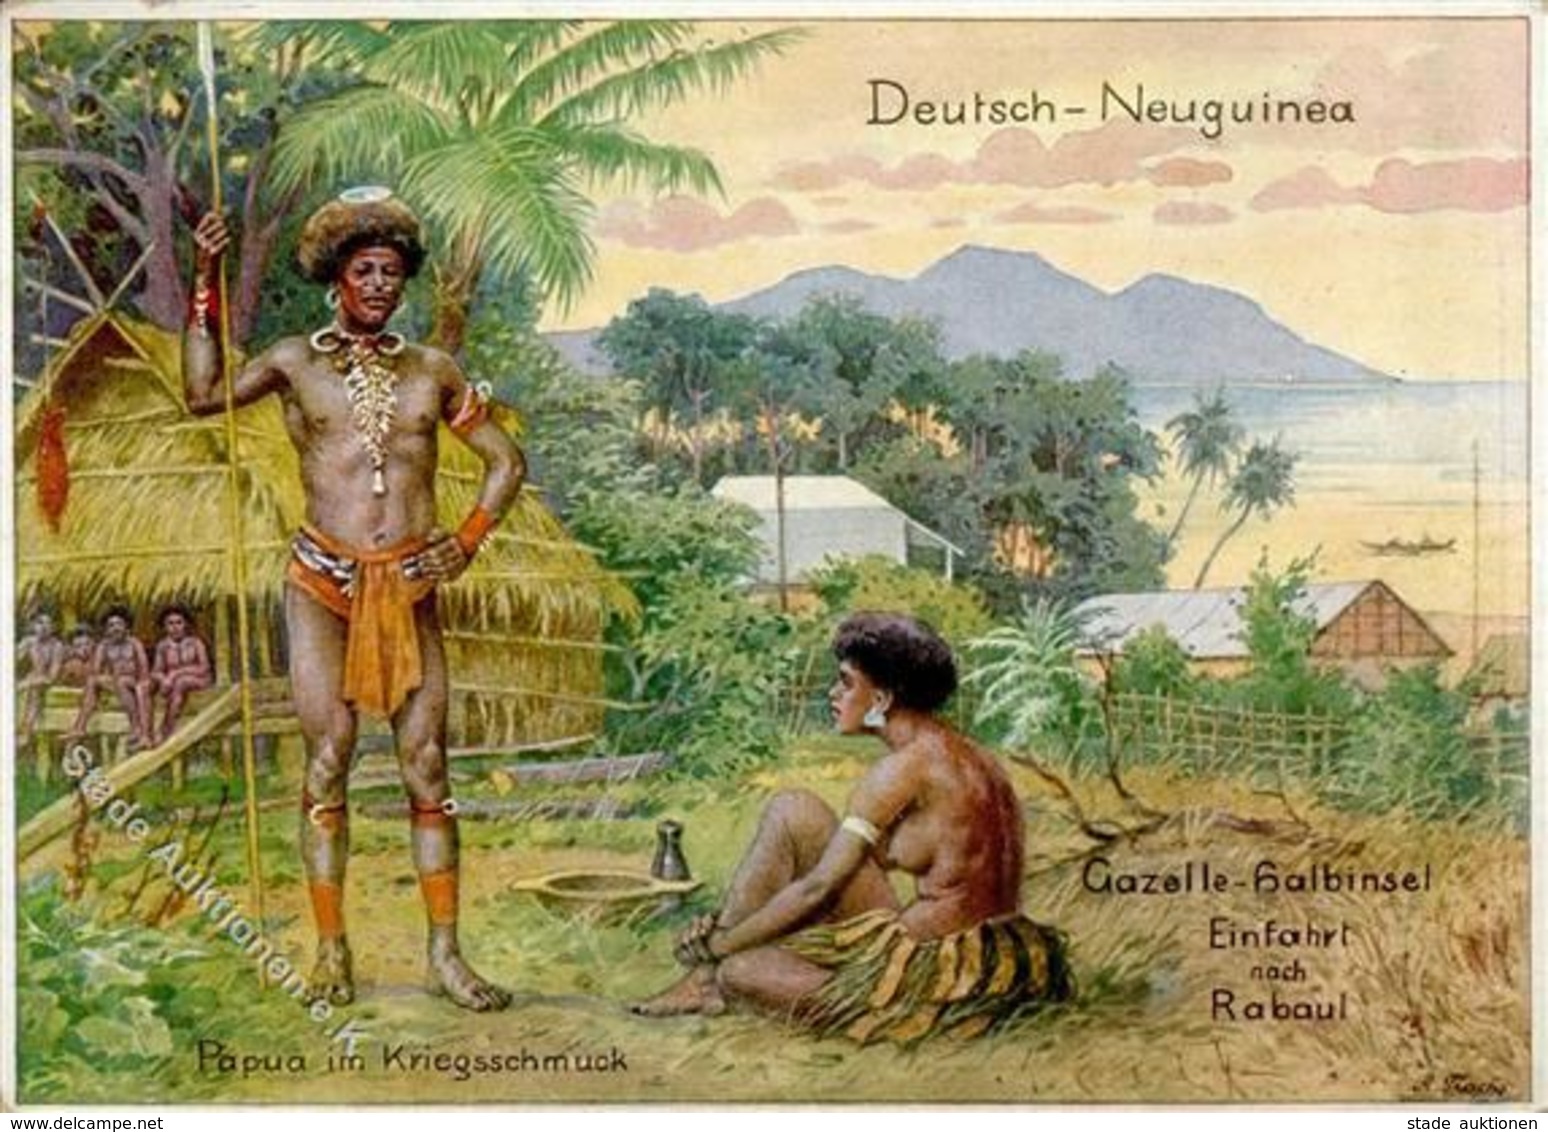 Kolonien DNG - DEUTSCH-NEUGUINEA - Gazelle-Halbinsel Einfahrt Nach Rabaul I-II Colonies - Asia